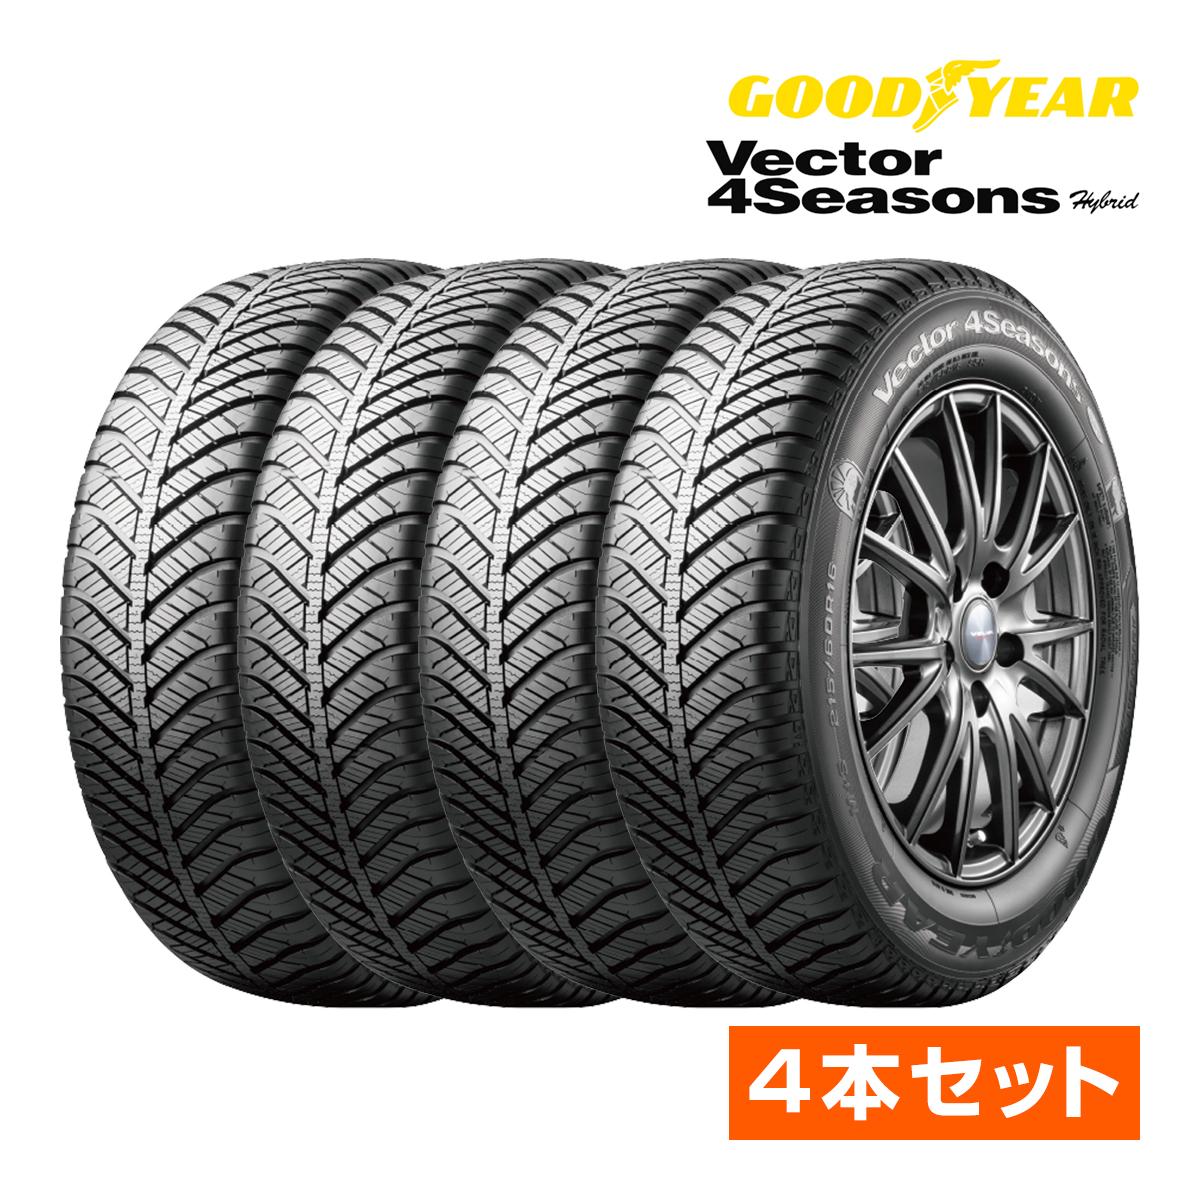 2024 year made all season tire Goodyear bekta-4 season z hybrid 165/65R15 81H 4 pcs set ALL SEASON Vector 4Seasons Hybrid domestic production 